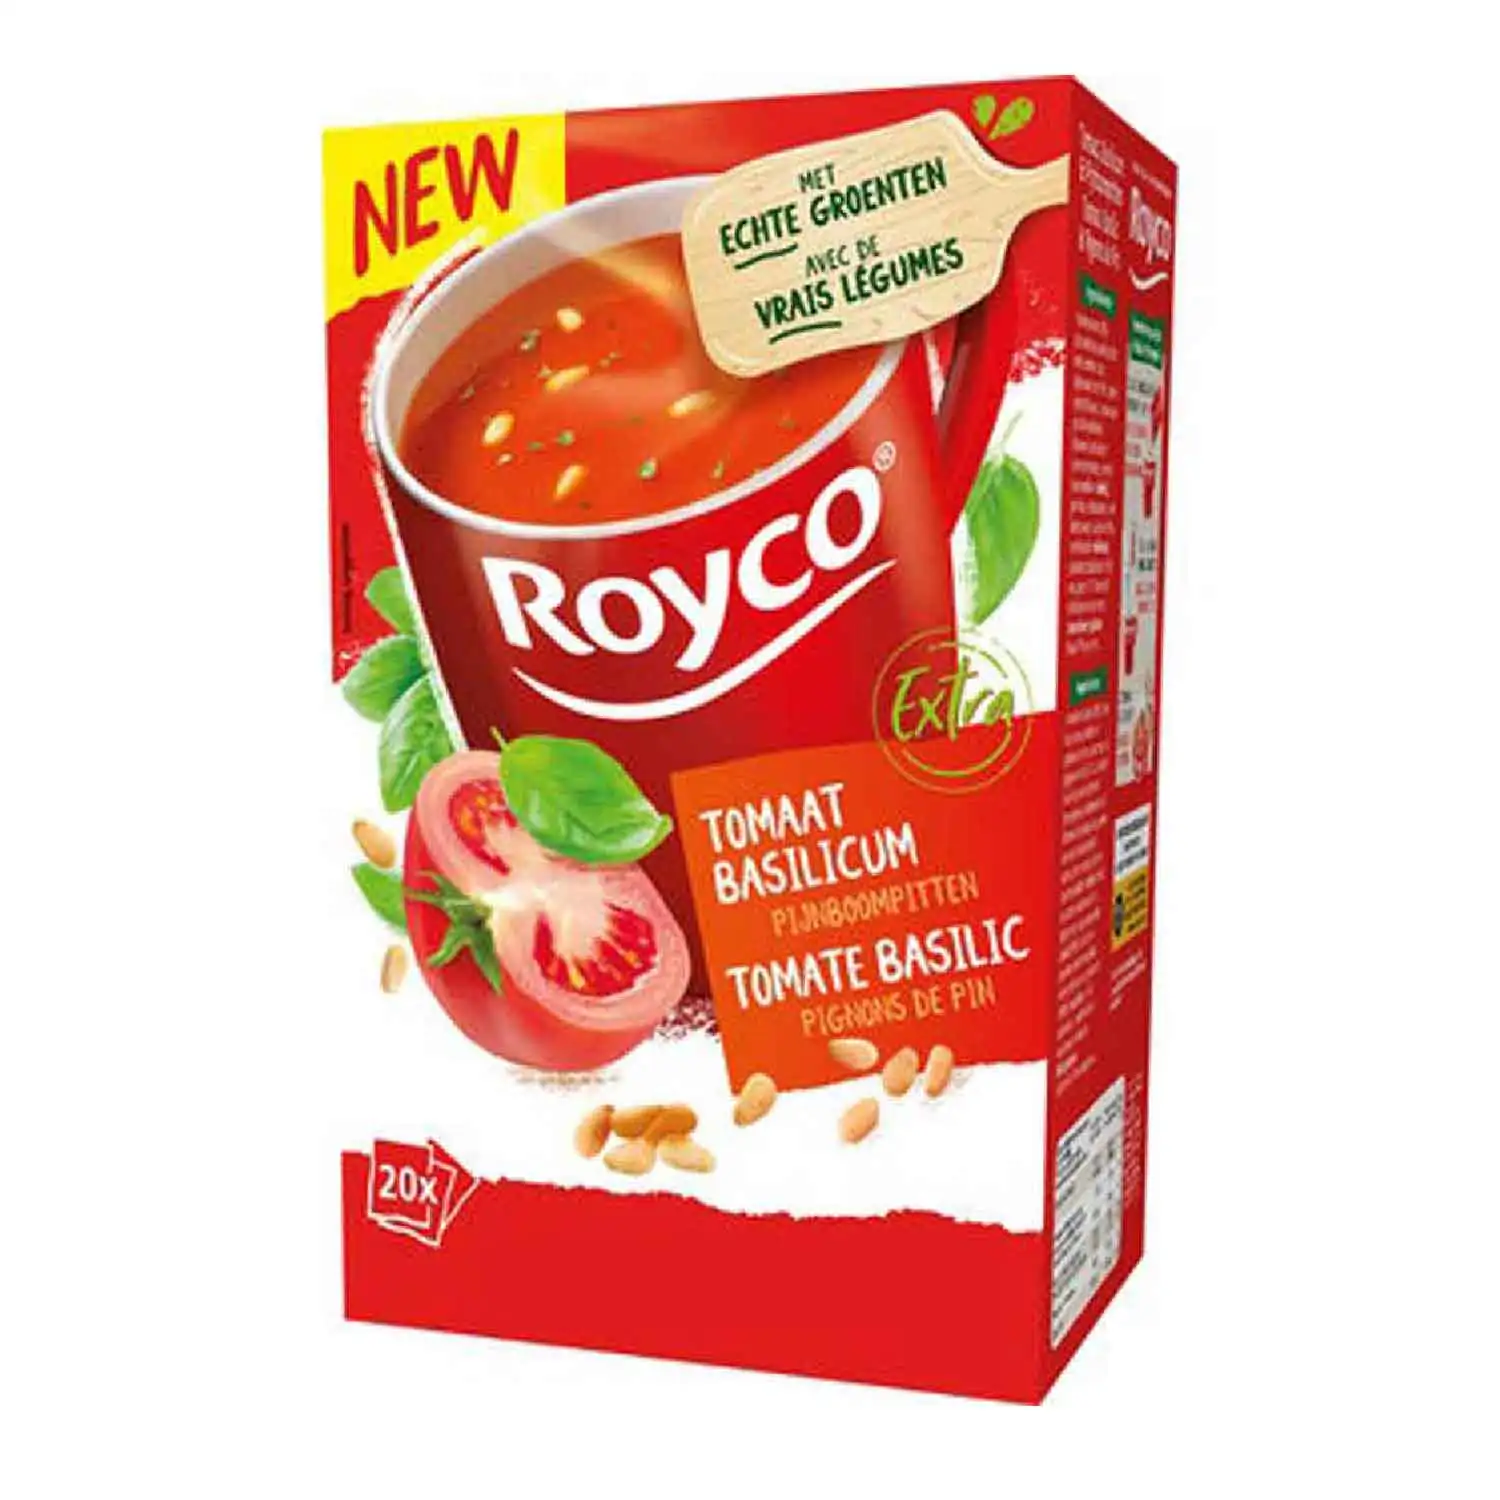 20x Royco classic tomato basil 18g - Buy at Real Tobacco